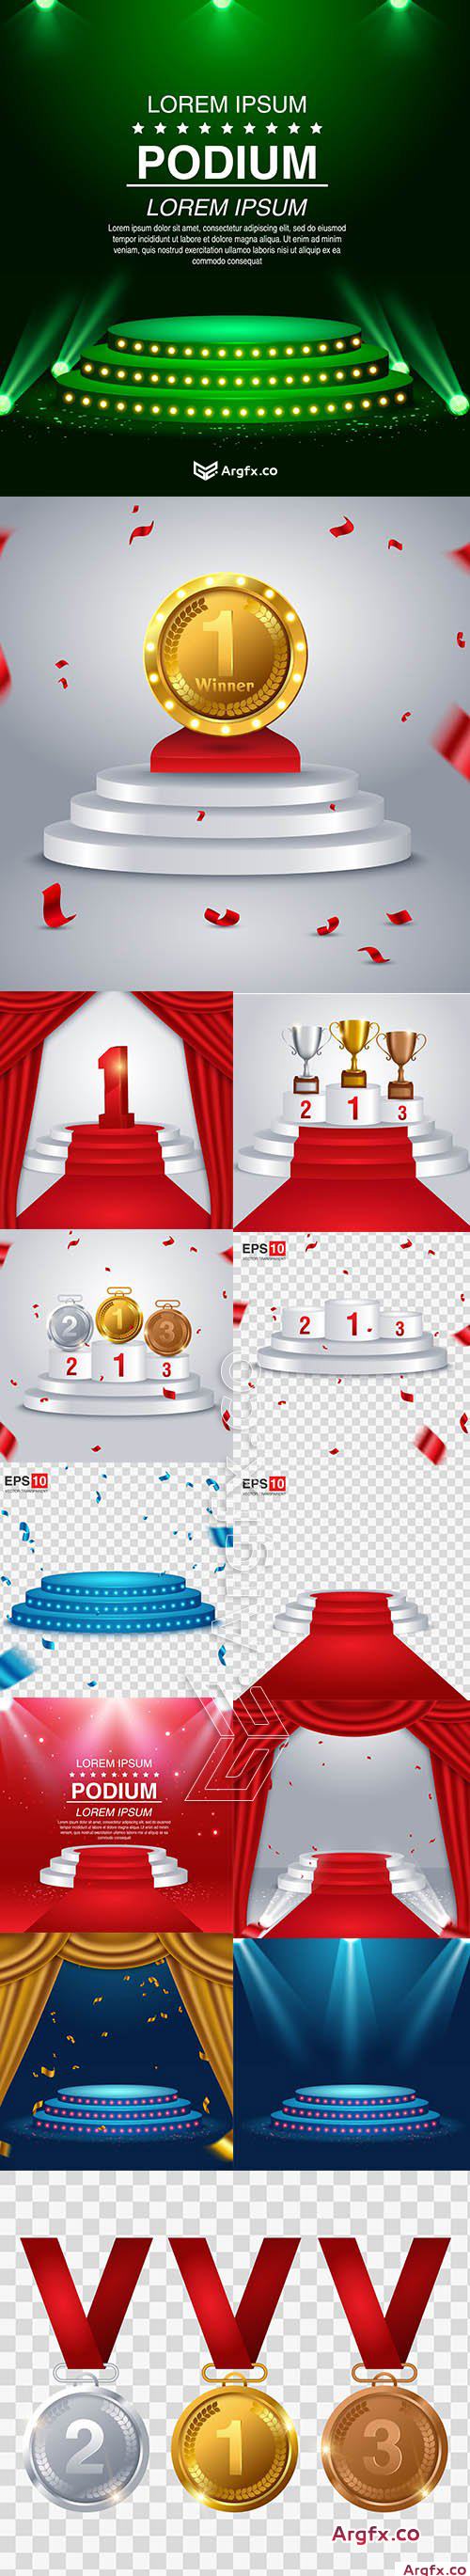 Red Carpet Round Podium Backgrounds